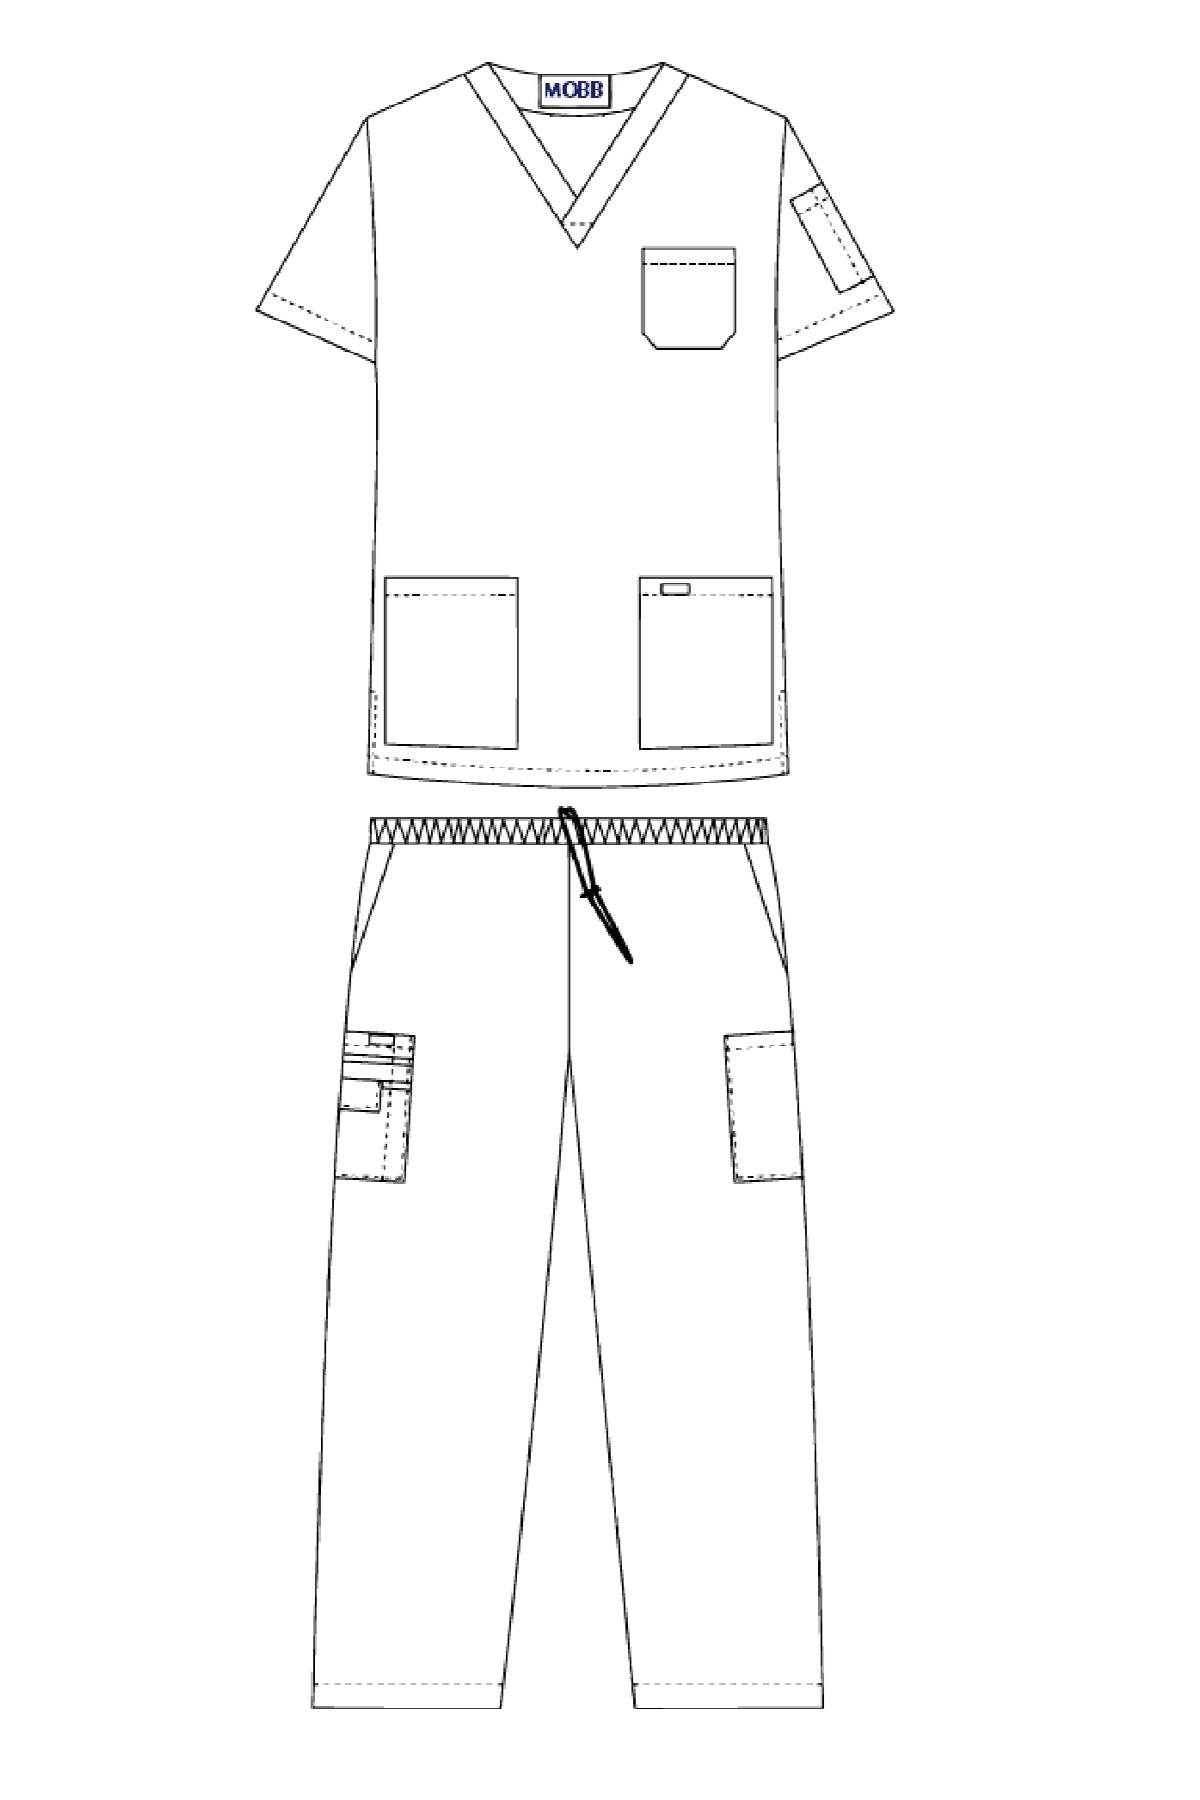 Natural Uniforms Drawstring Elastic back 4 Pocket Scrub Pants Sizes L & 2X